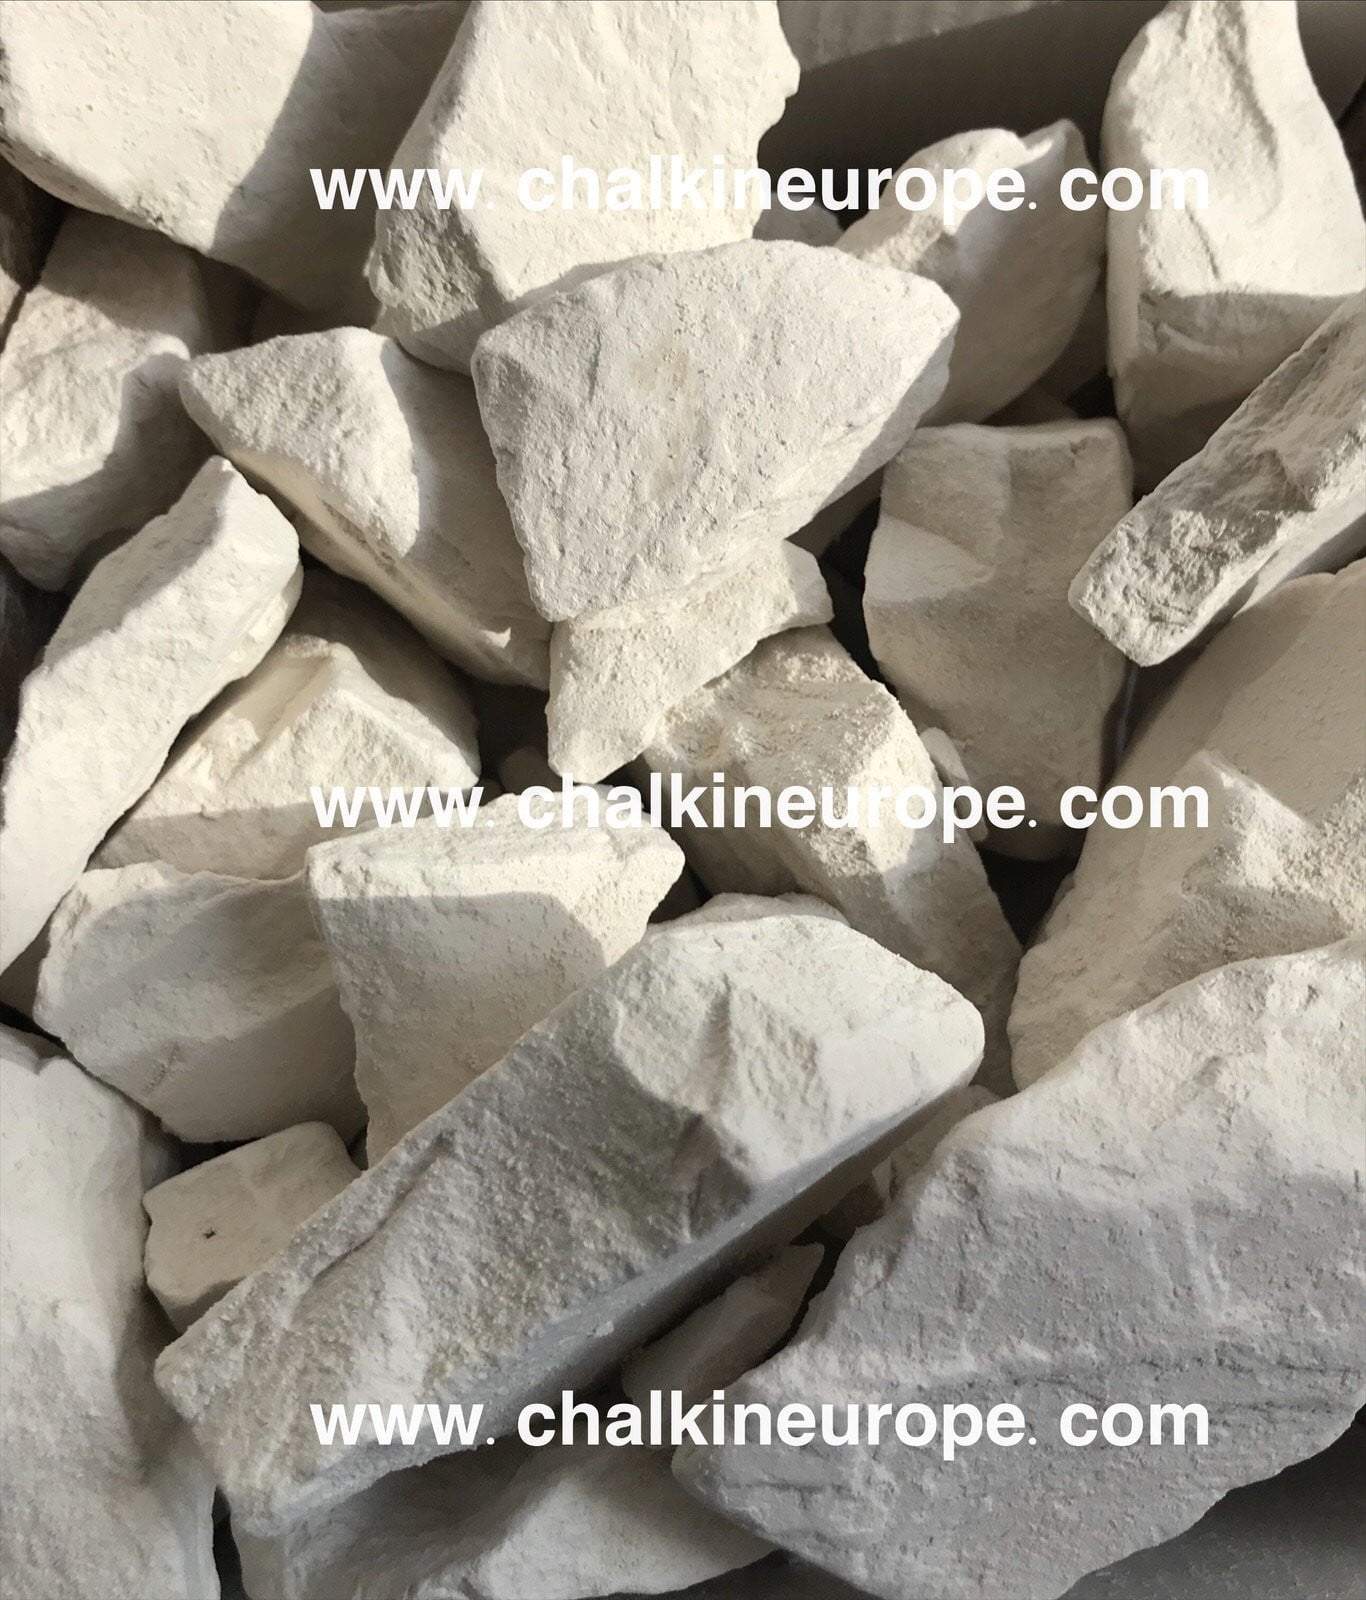 Hard White Clay - Chalkineurope